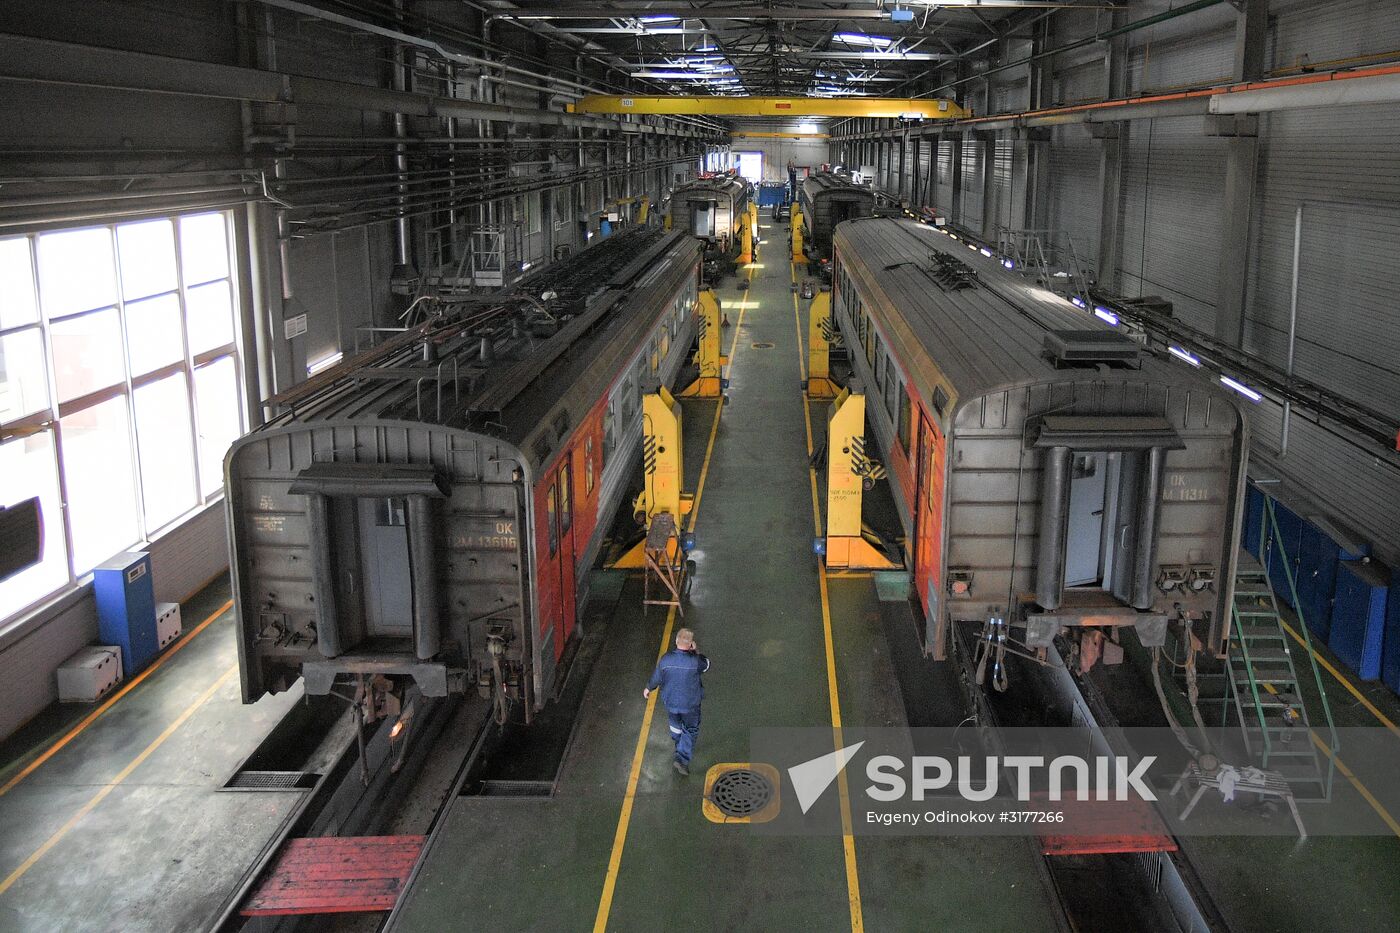 Kryukovo multiple units depot